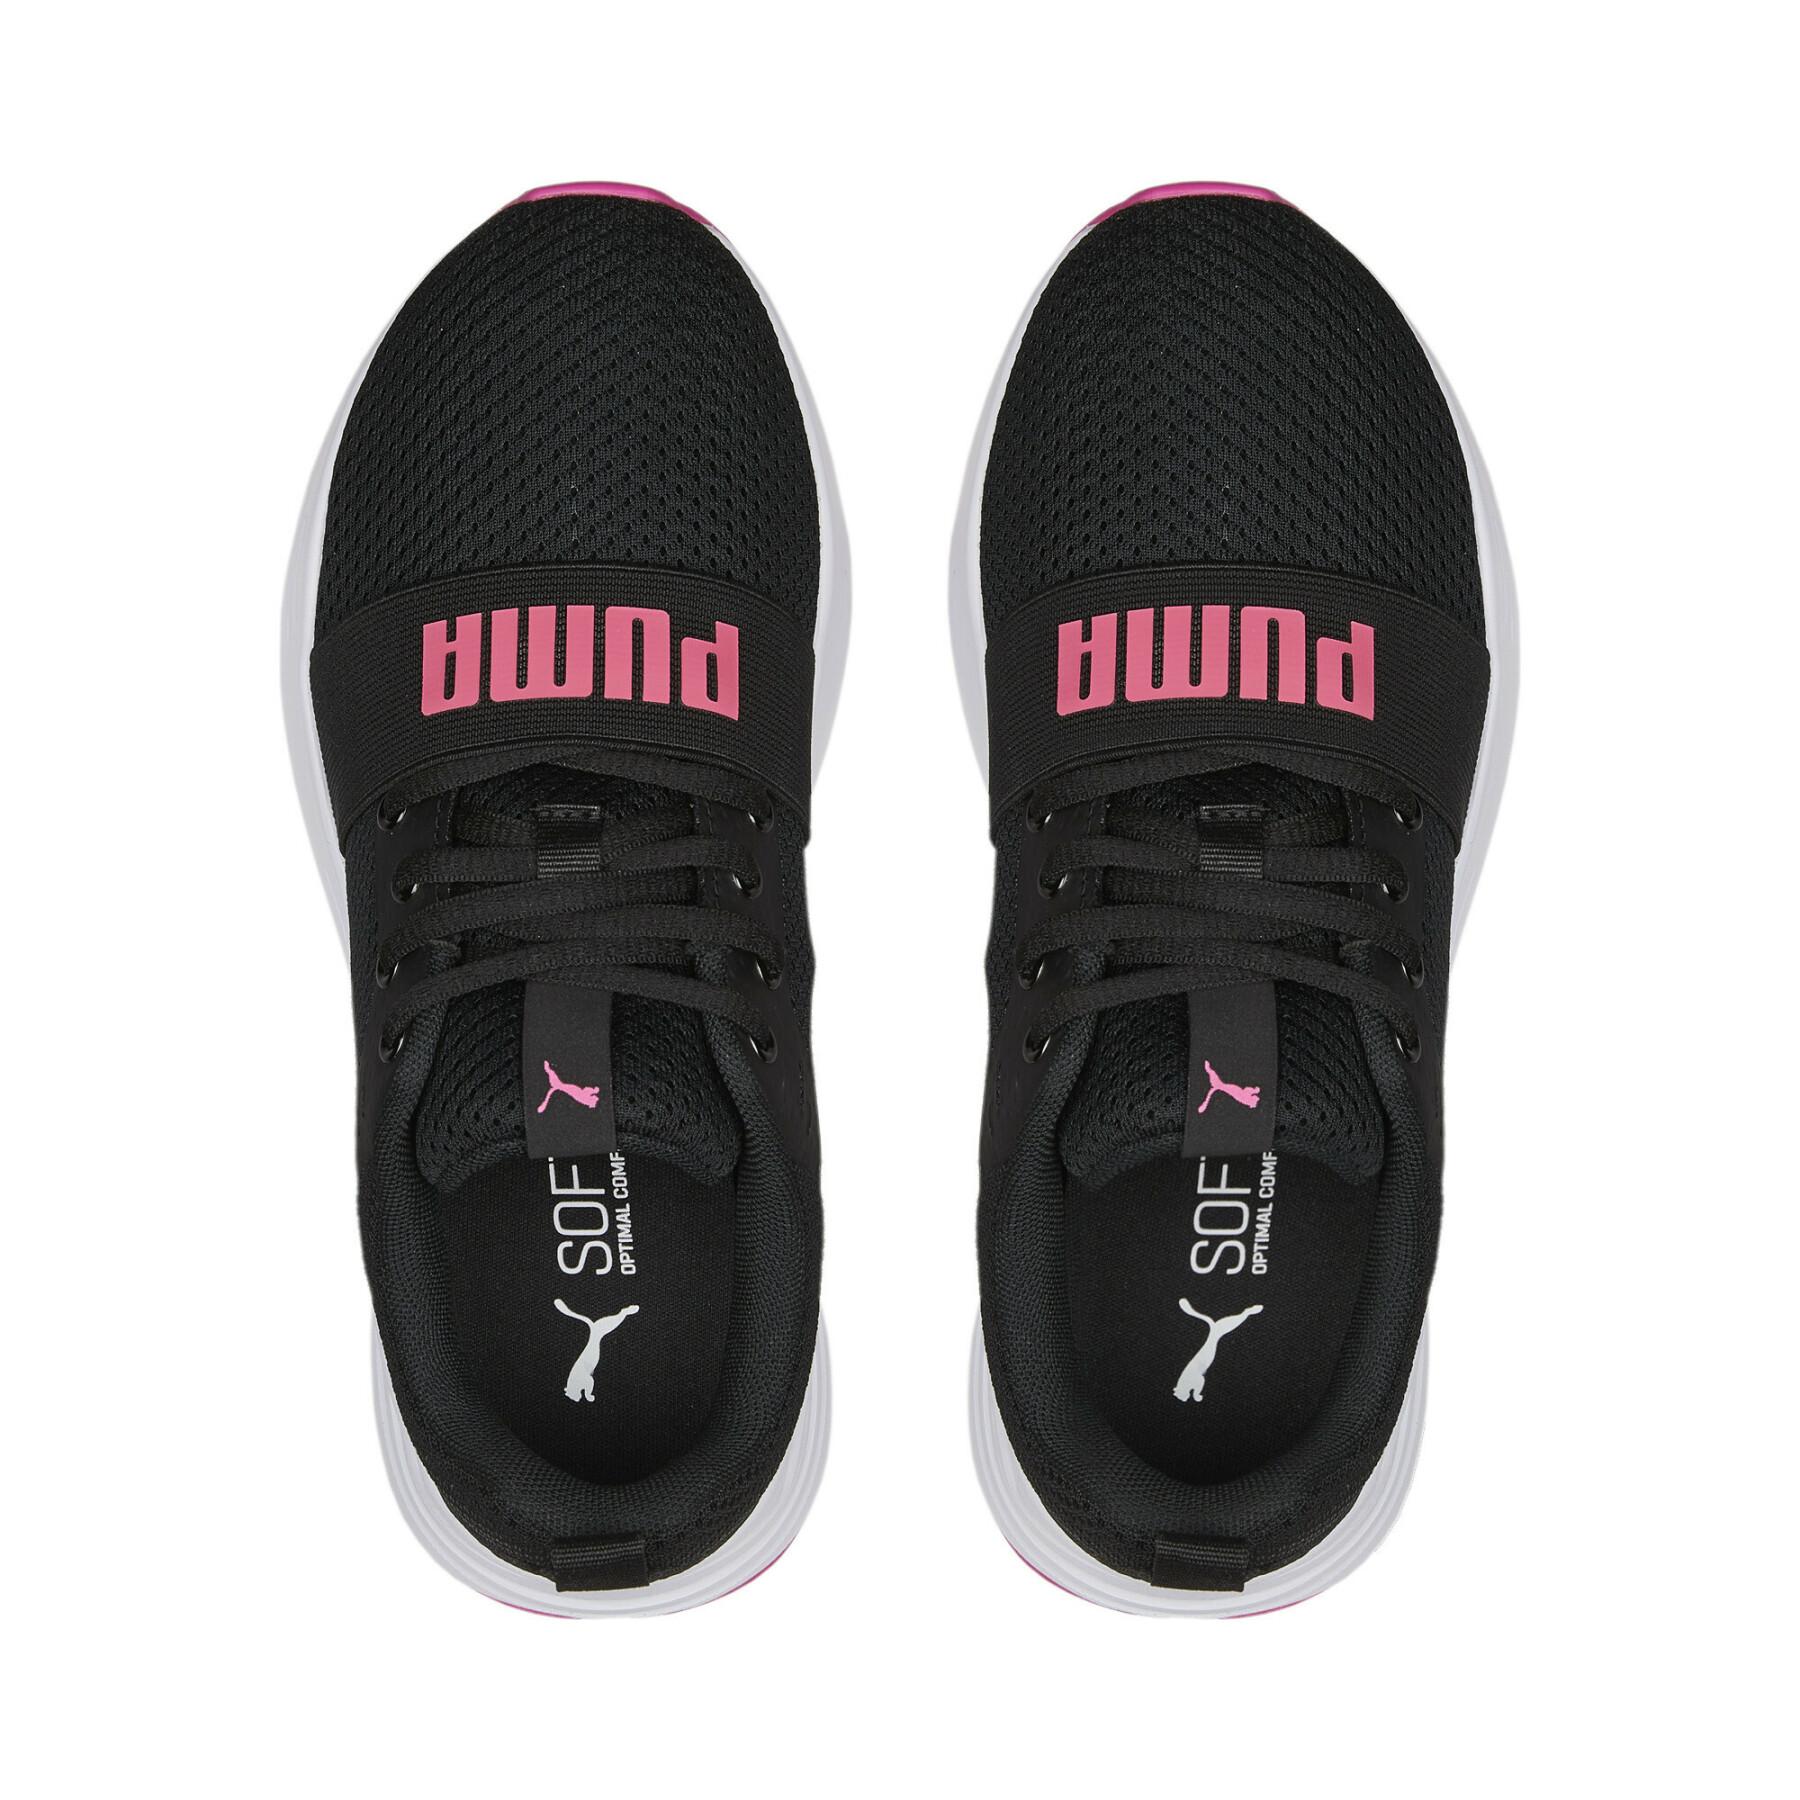 Zapatos Puma Wired Run